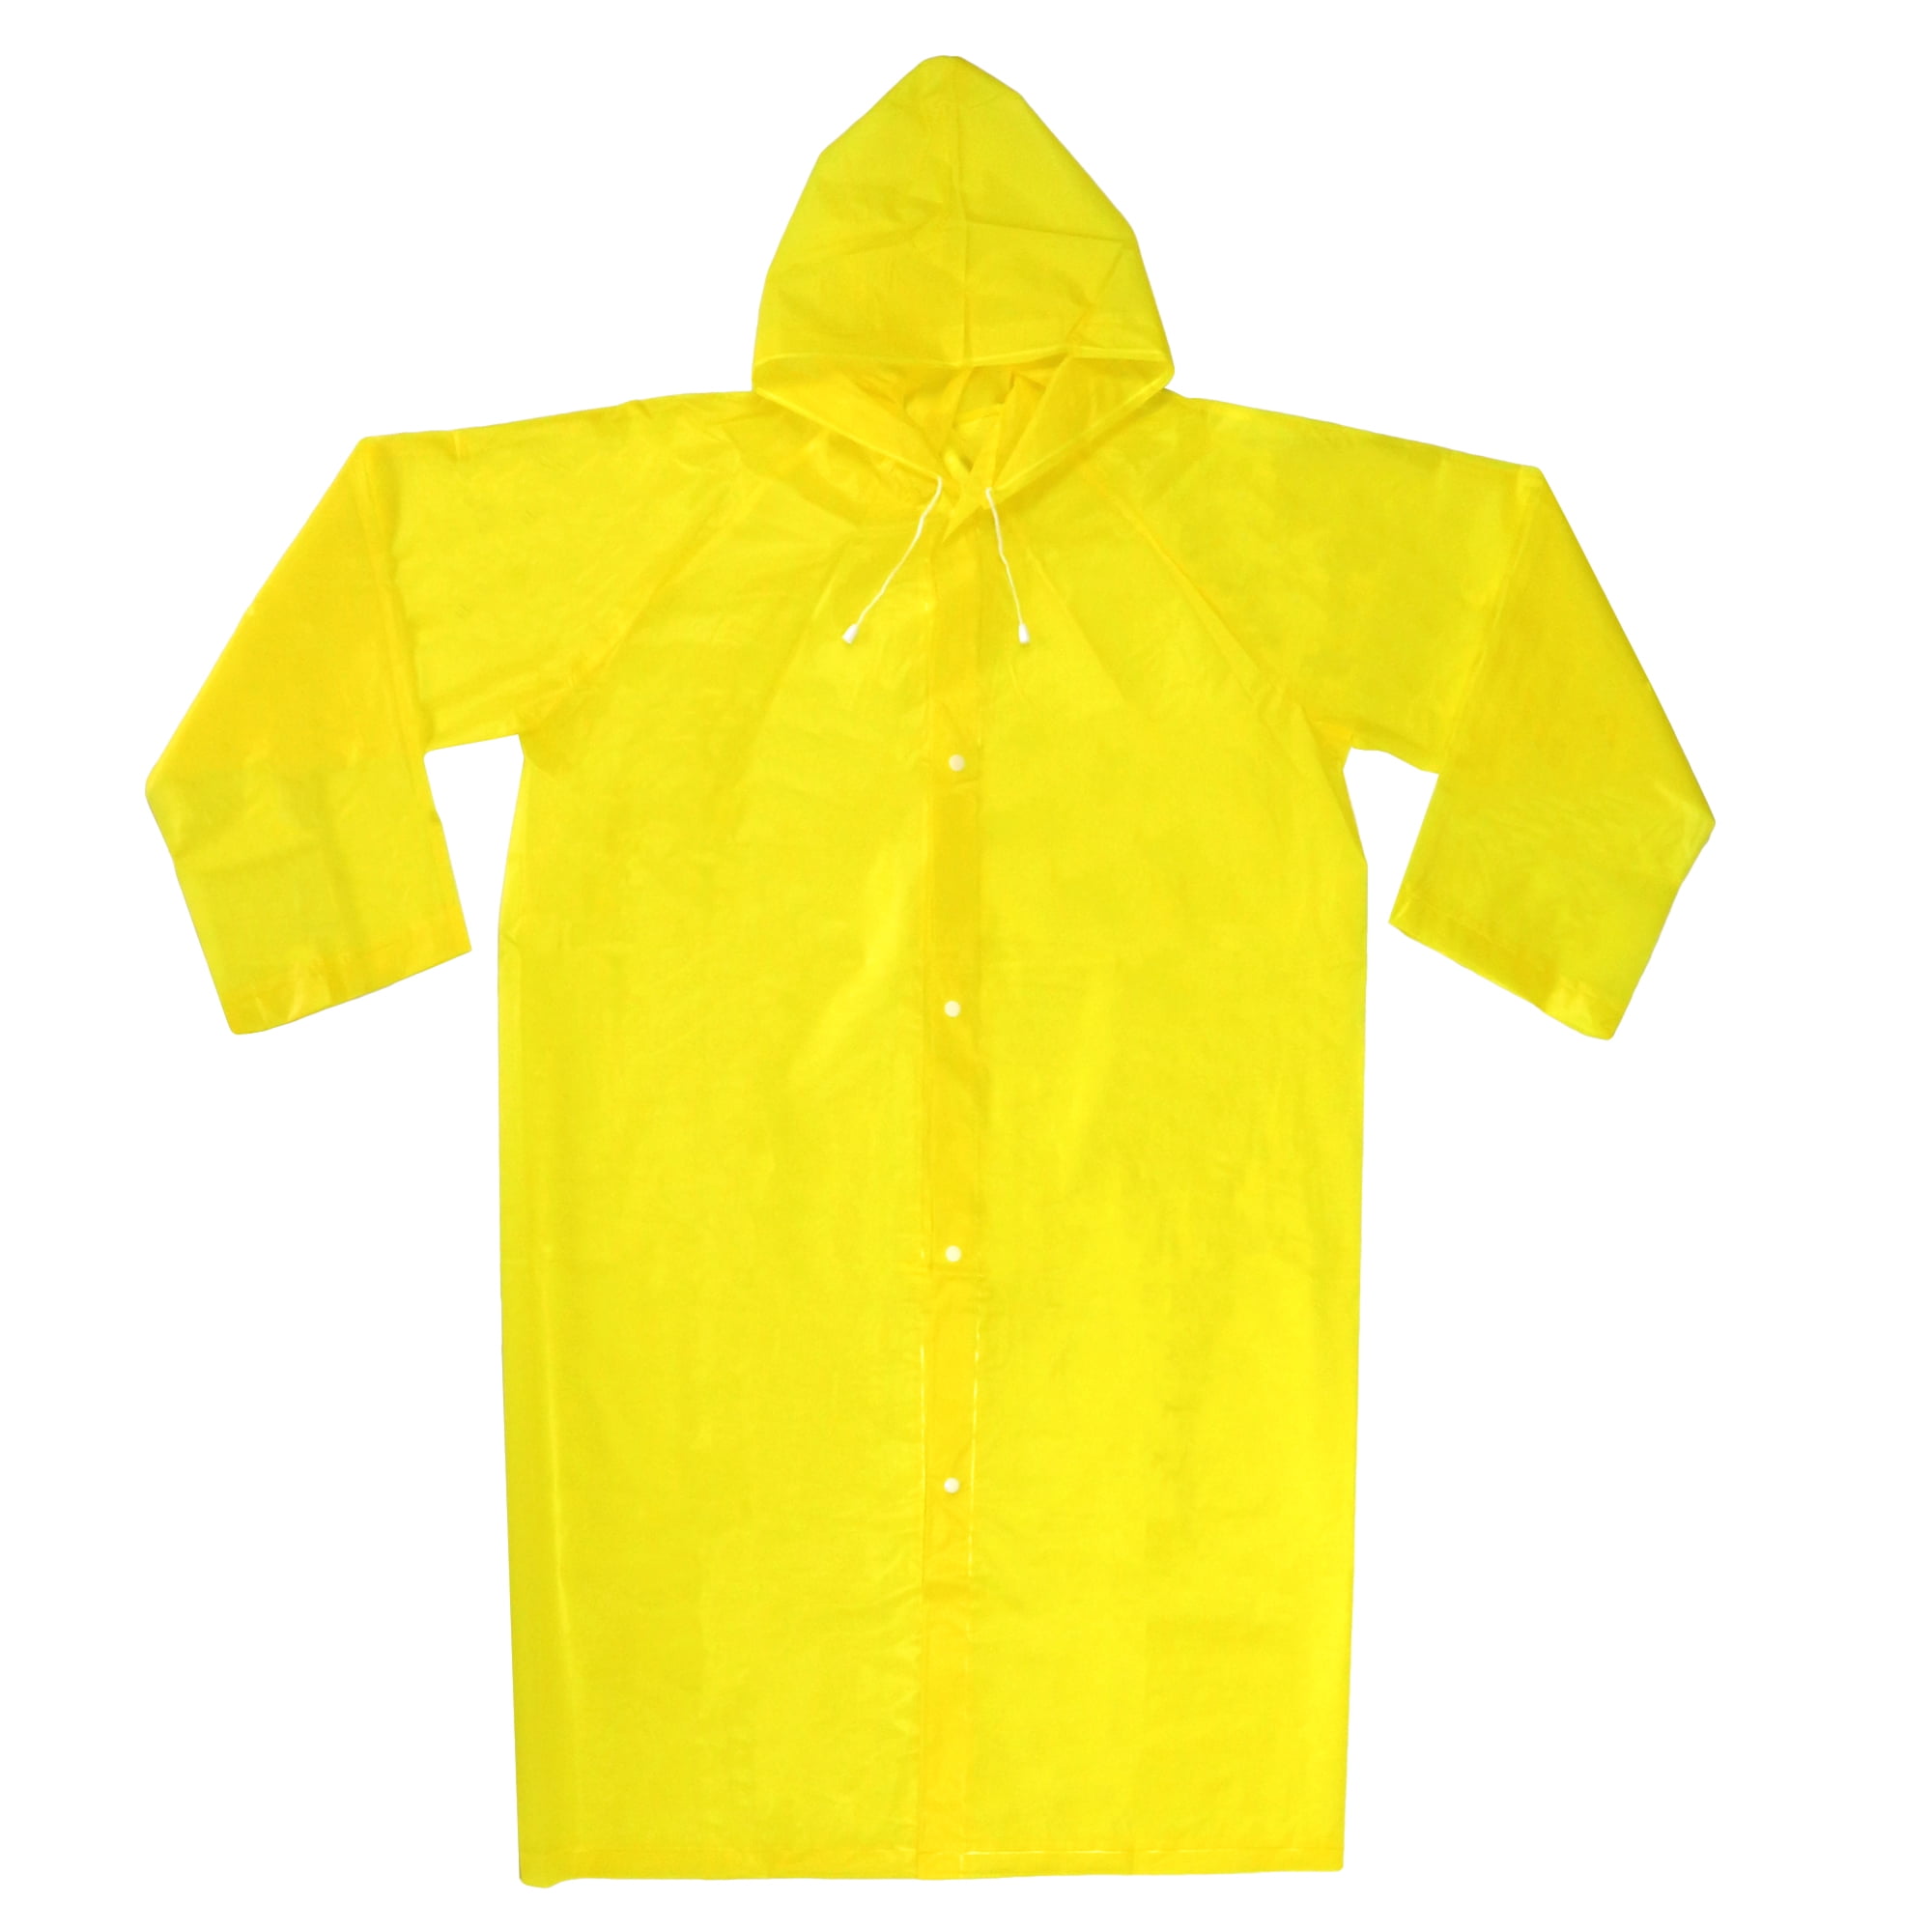 Unisex Adult Portable Raincoat Rain Poncho with Hoods and 1) - Walmart.com